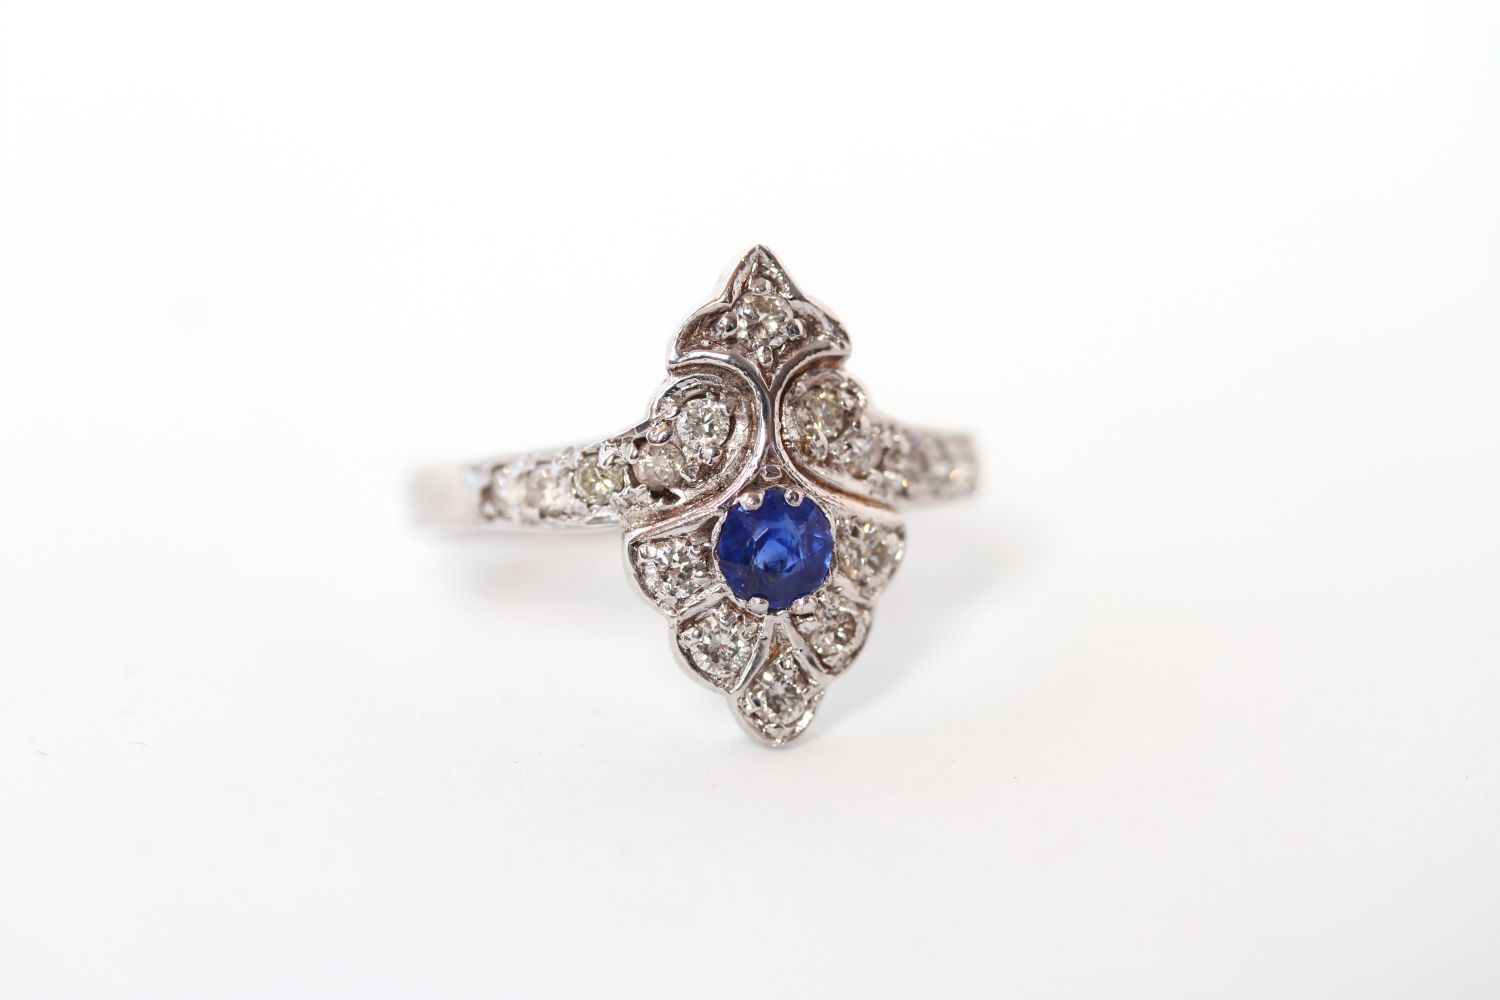 Sapphire and diamond art deco style ring, round cut sapphire set with brilliant cut diamonds,